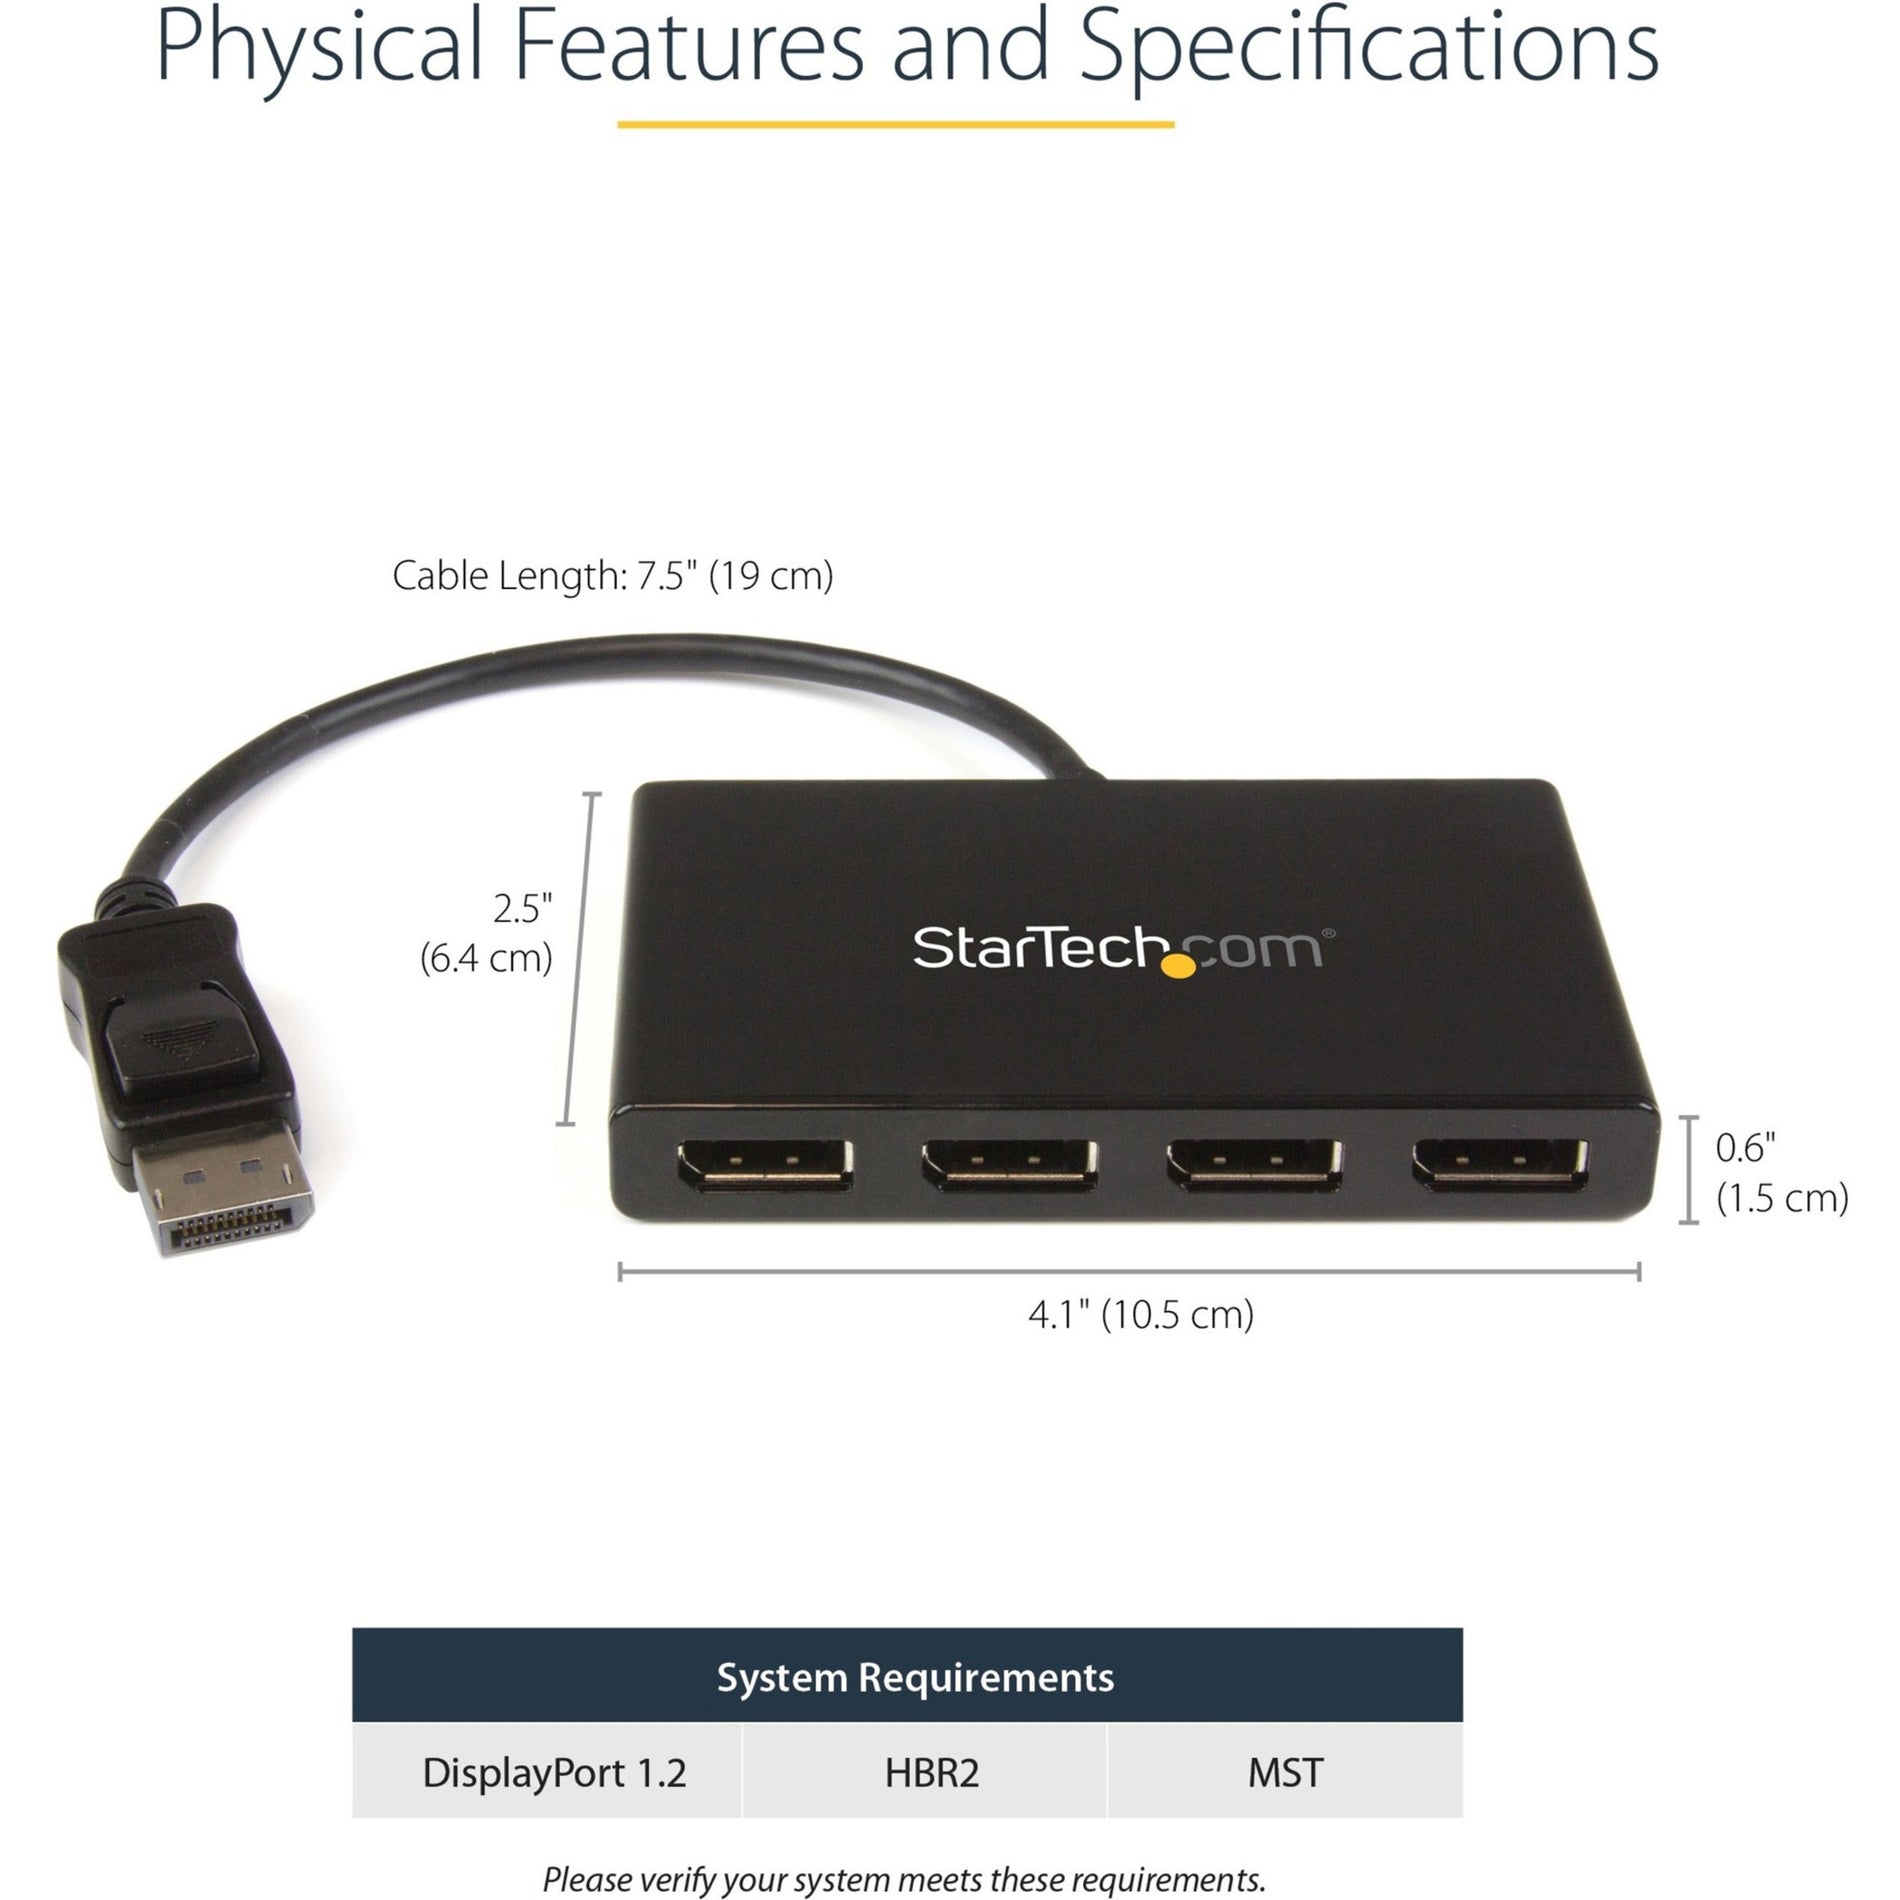 StarTech.com MSTDP124DP MST Hub - DisplayPort to 4x DisplayPort, Multi Stream Transport Hub - DP 1.2 to DP, 4K Video Resolution